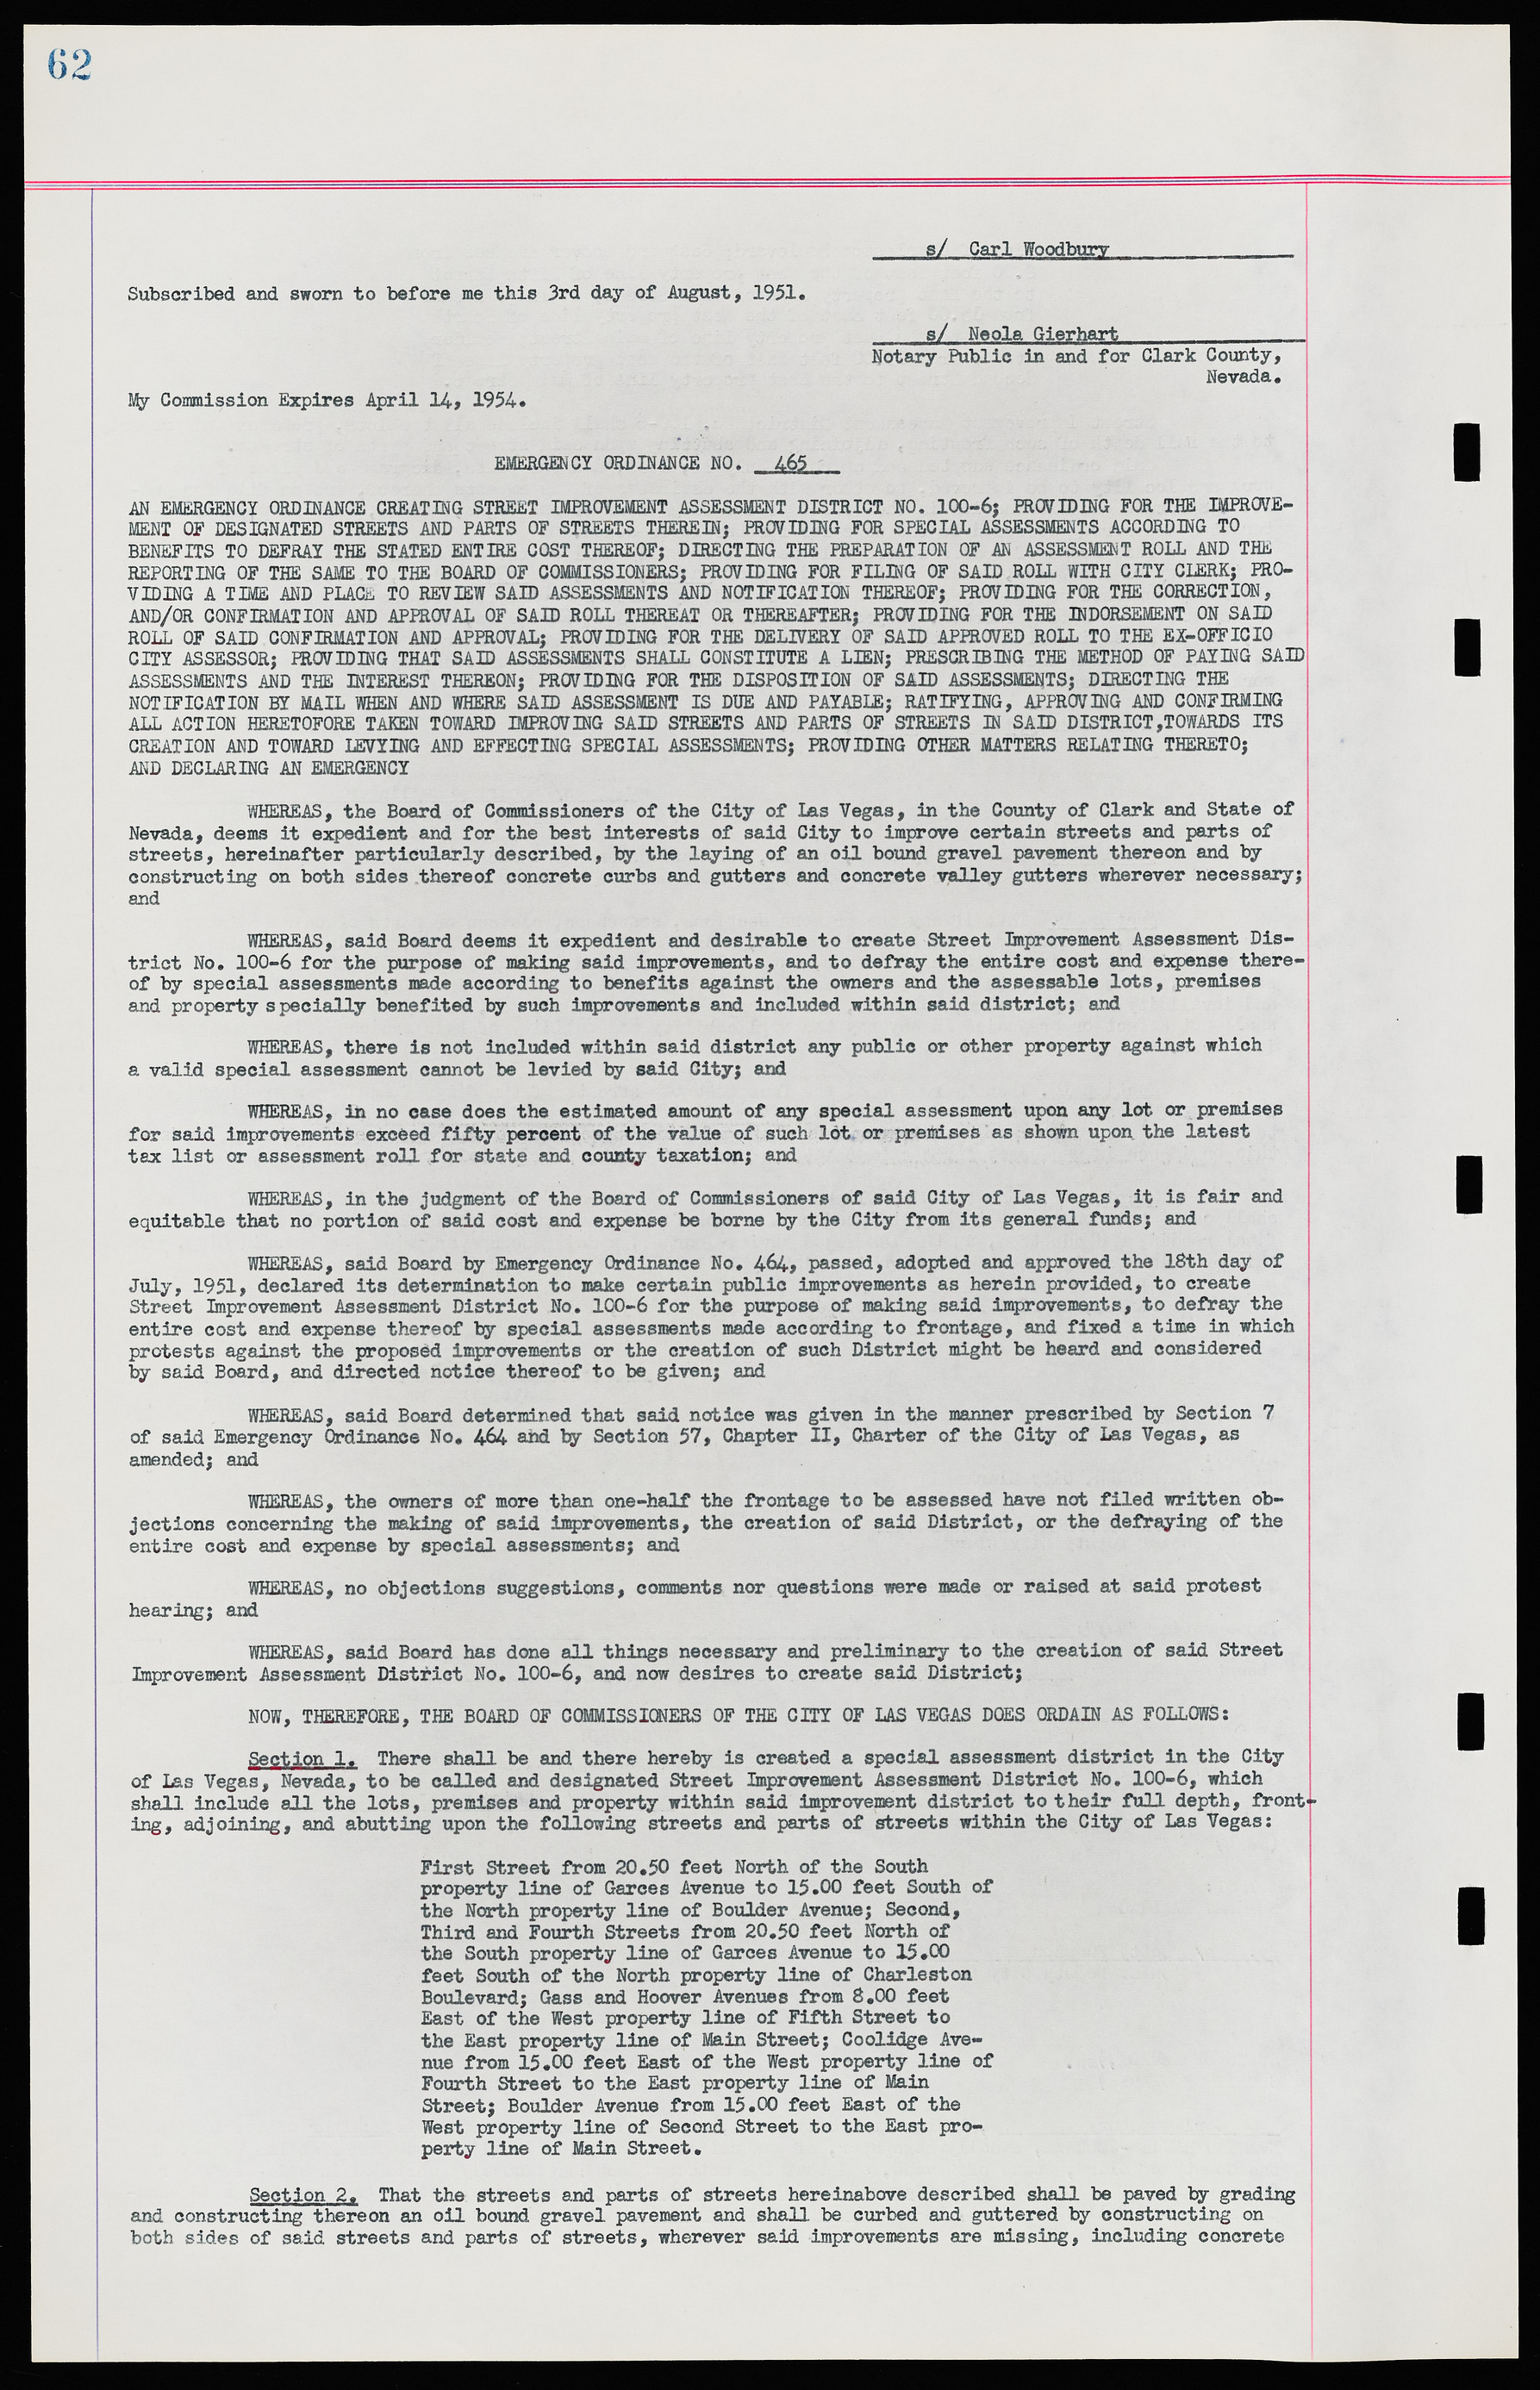 Las Vegas City Ordinances, November 13, 1950 to August 6, 1958, lvc000015-70